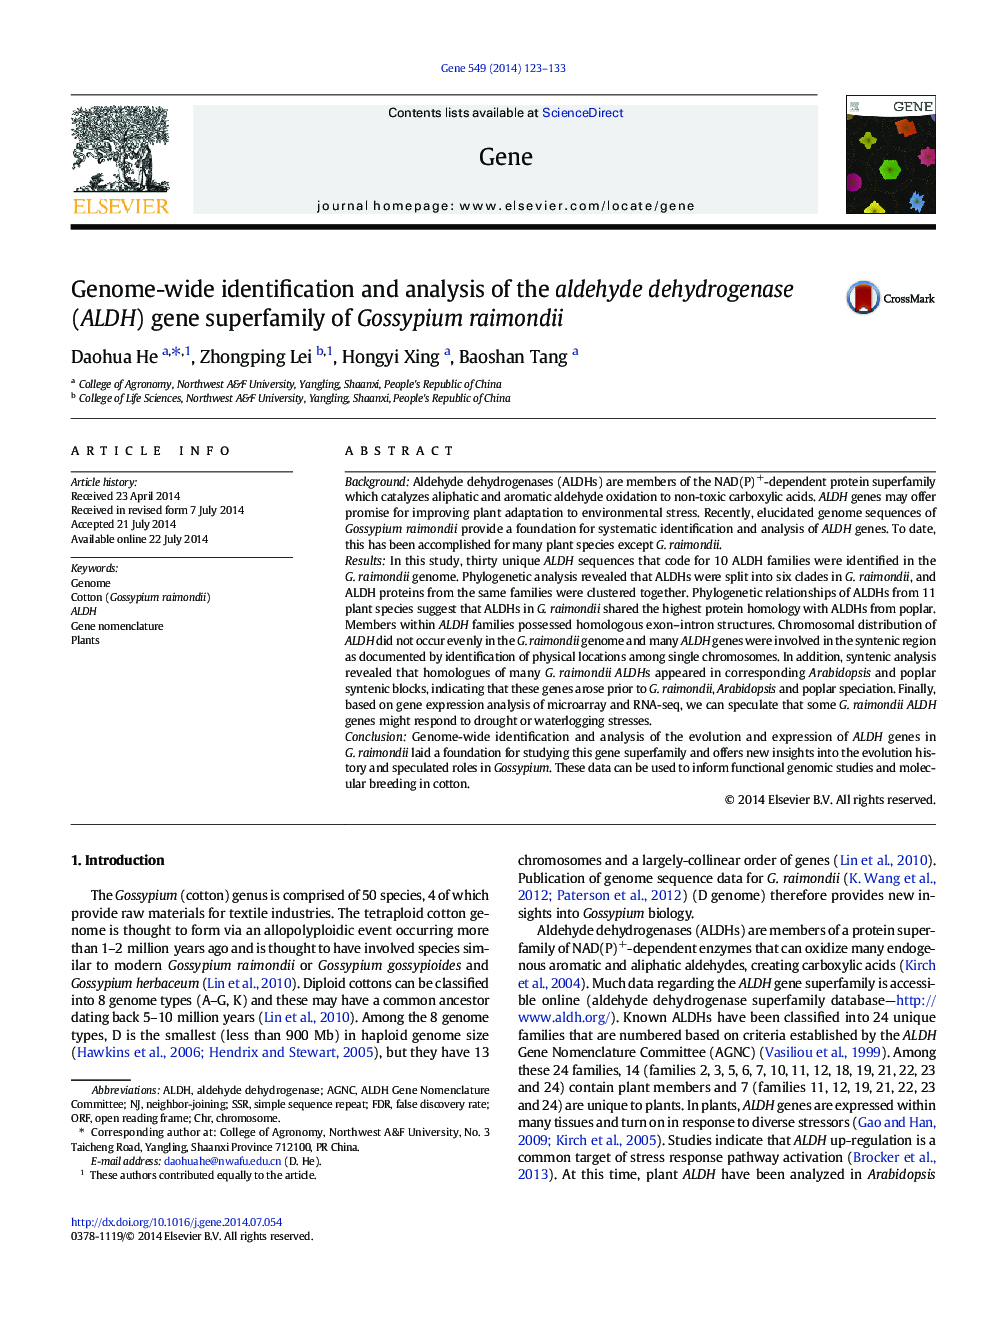 Genome-wide identification and analysis of the aldehyde dehydrogenase (ALDH) gene superfamily of Gossypium raimondii